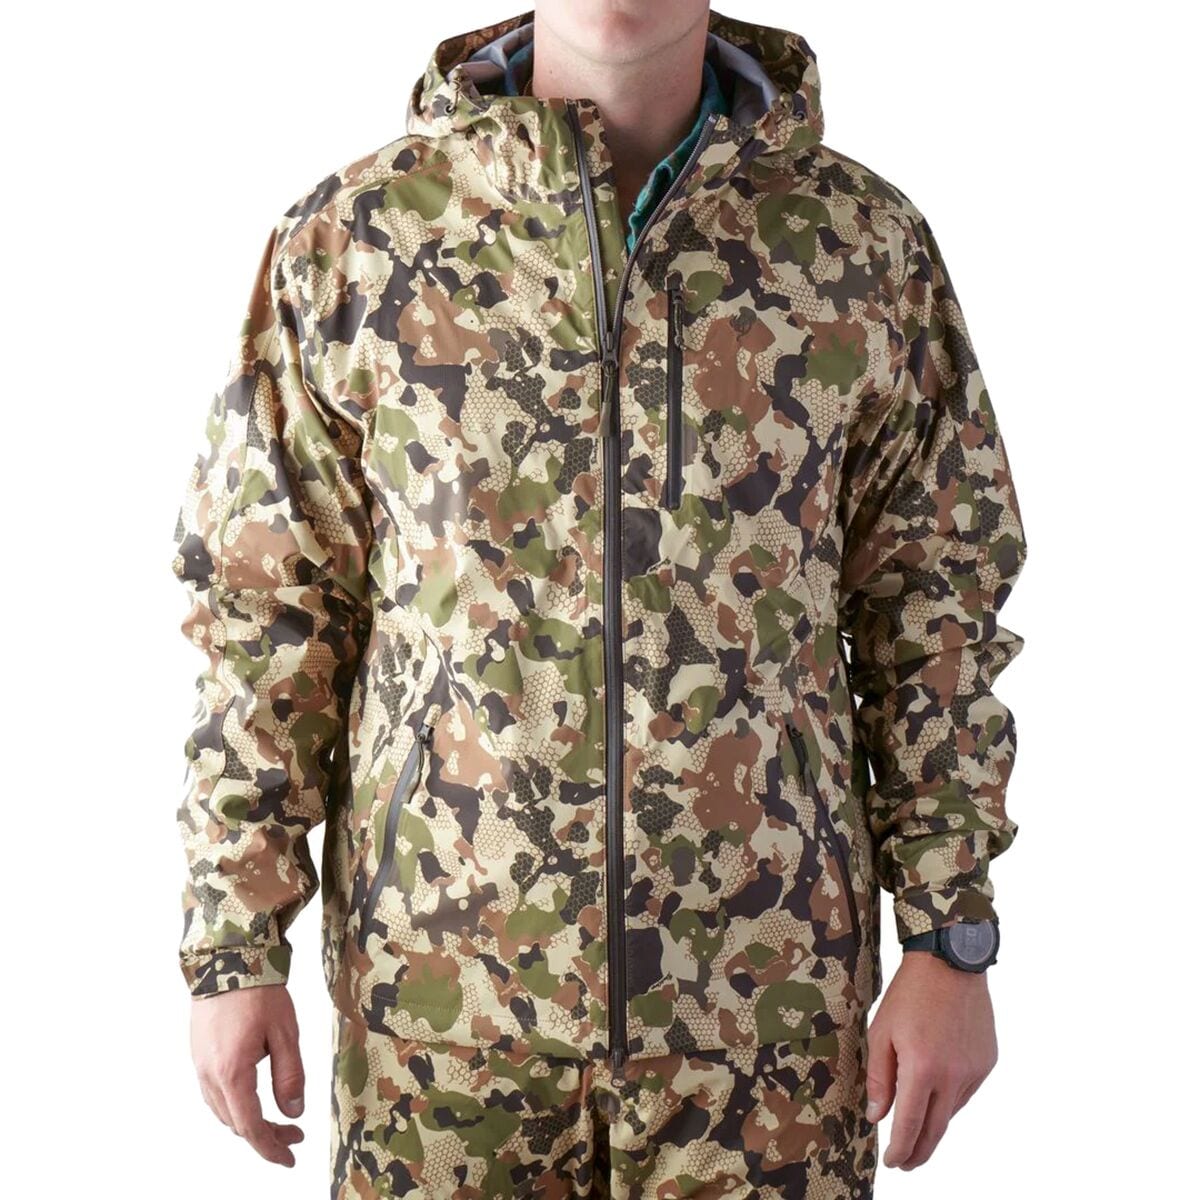 Duck Camp Squall 3L Ultralight Rain Jacket - Men's